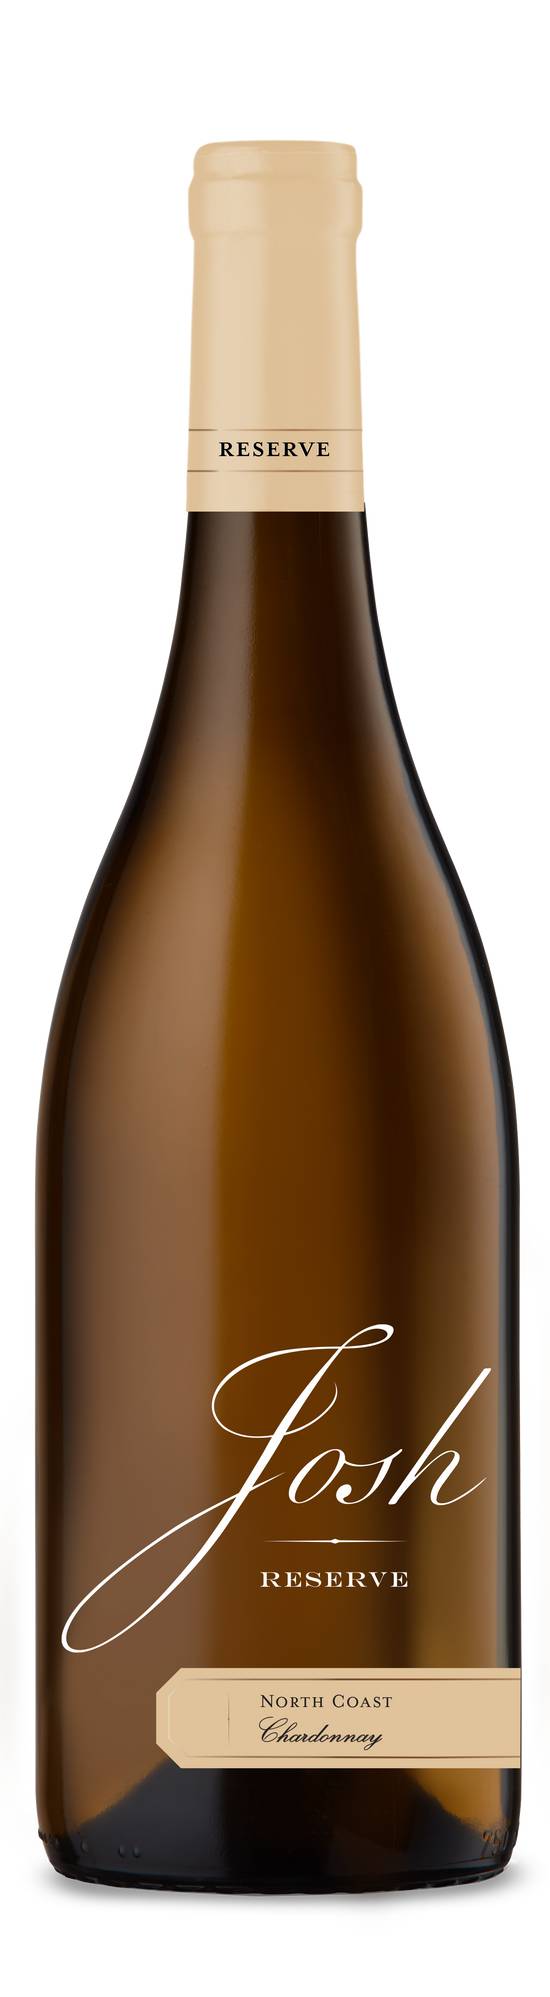 Josh Cellars Reserve North Coast Chardonnay Wine (750 ml)